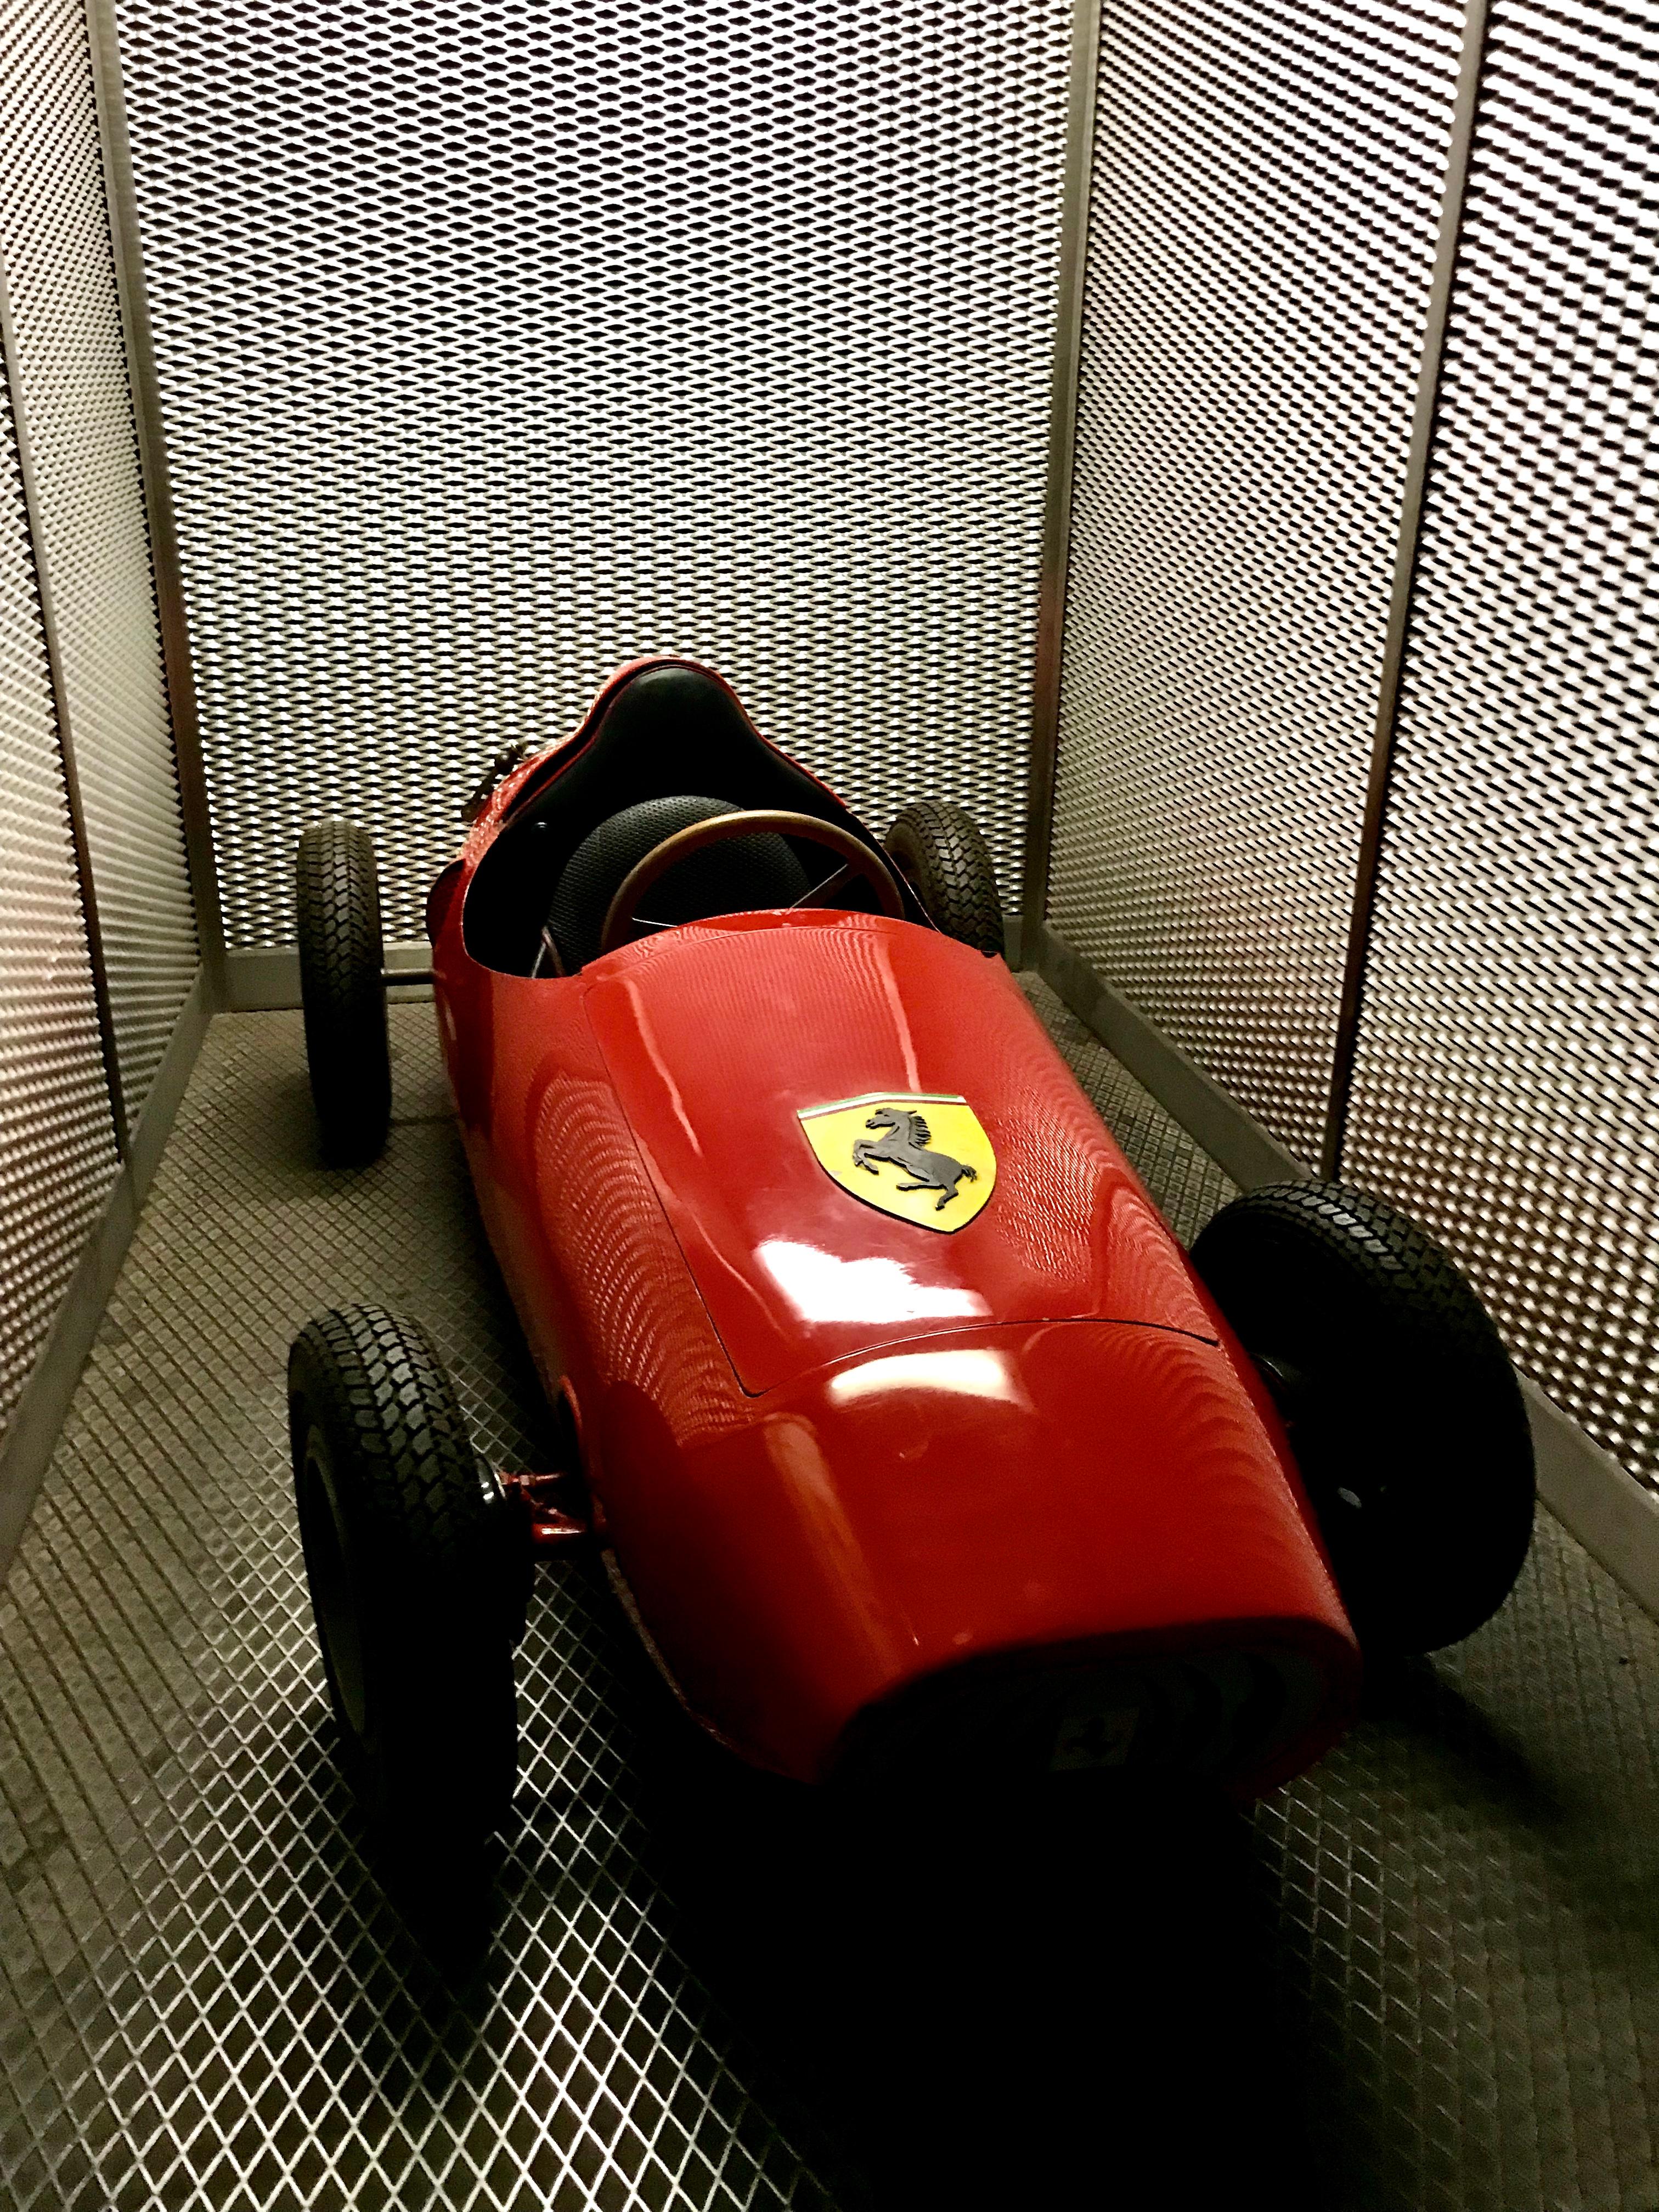 “Ferrari 500 F2” Prototype, Children's Car, 1: 2 Scale, 1950s 9